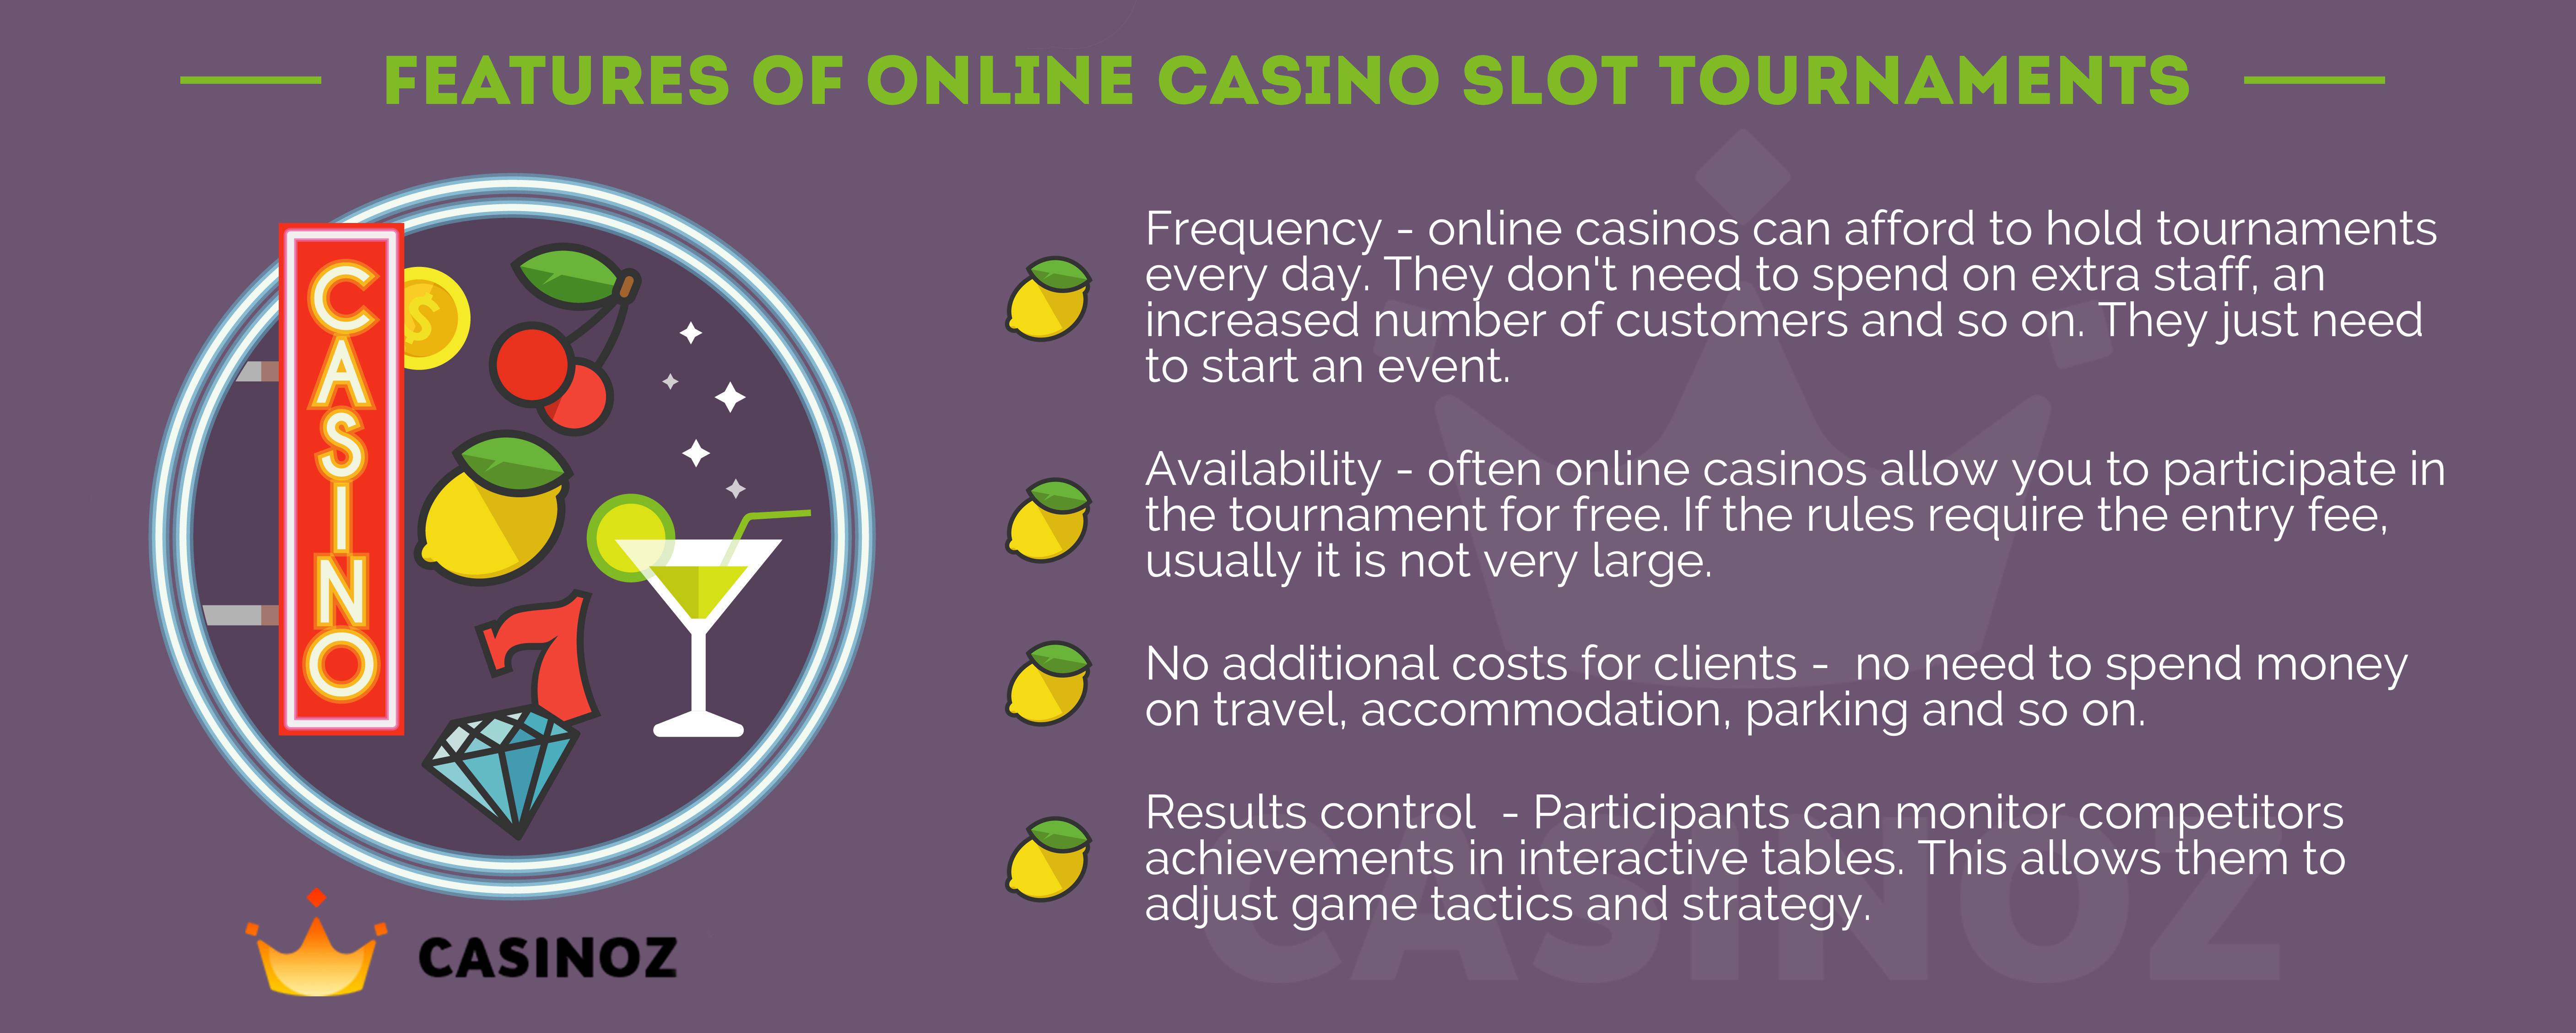 Online Casino Tournaments Free